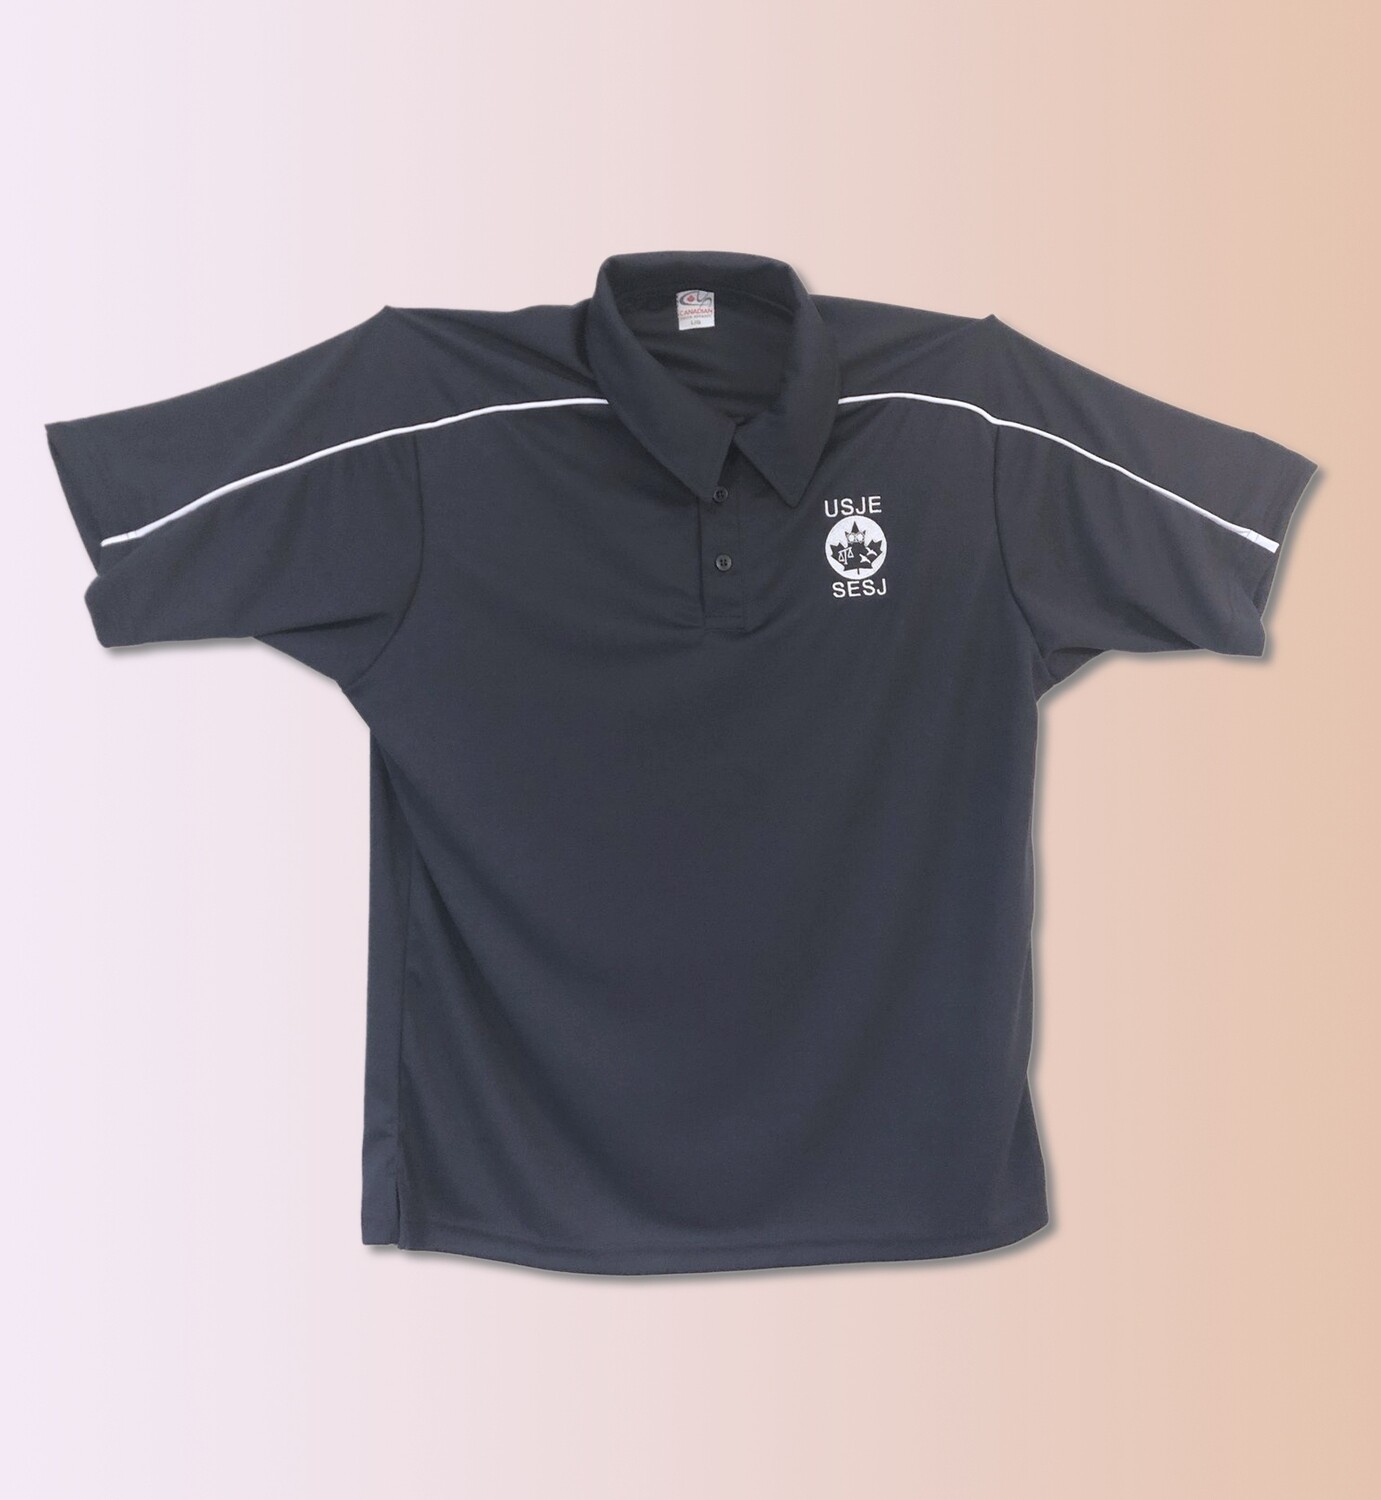 USJE Performance Piqué Polo Shirt (Black) (Men) / Polo performance en piqué du SESJ (Noir) (Homme)